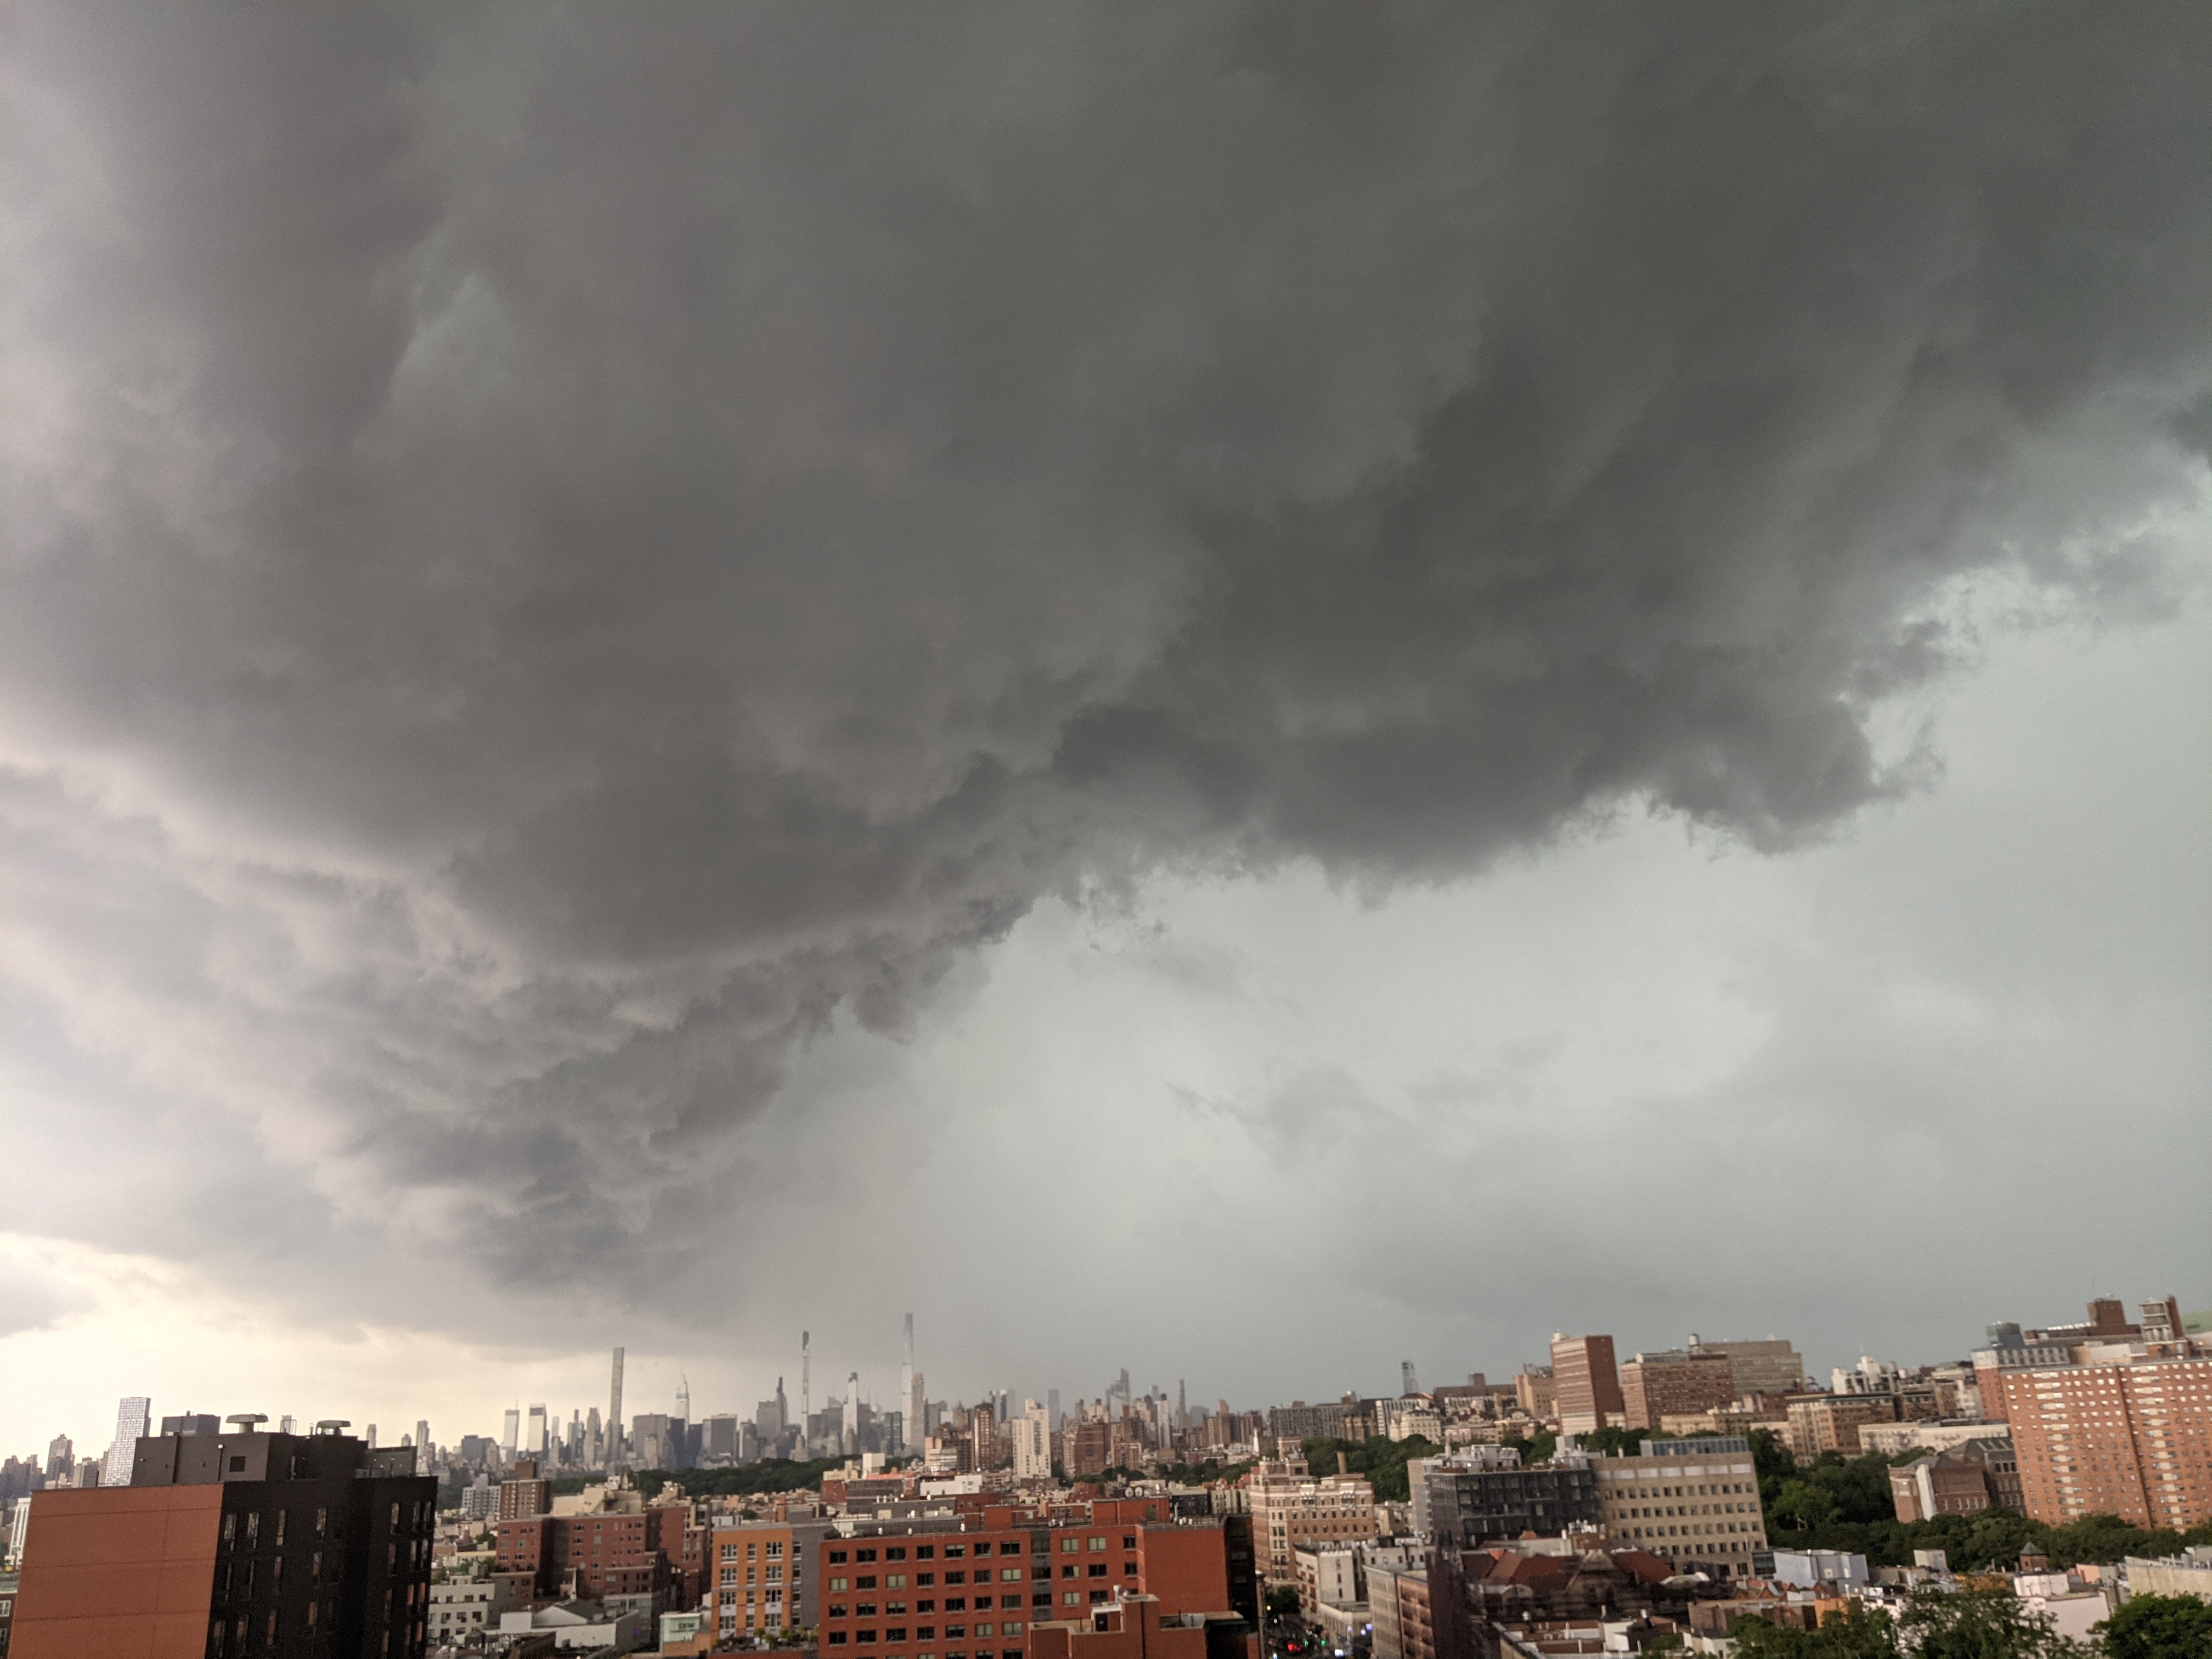 A photo of a storm over Manhattan